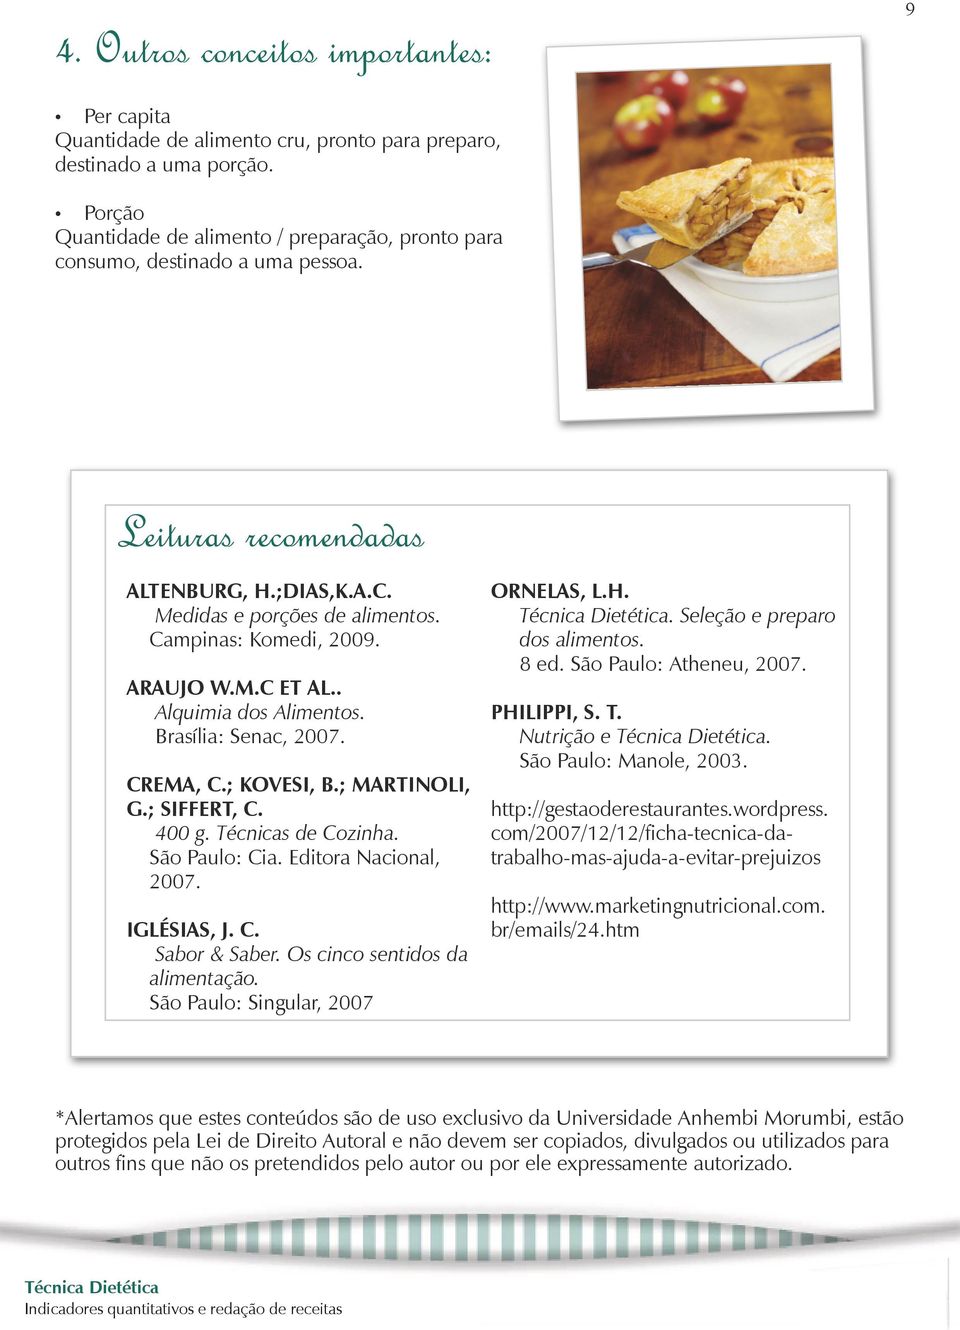 ARAUJO W.M.C ET AL.. Alquimia dos Alimentos. Brasília: Senac, 2007. CREMA, C.; KOVESI, B.; MARTINOLI, G.; SIFFERT, C. 400 g. Técnicas de Cozinha. São Paulo: Cia. Editora Nacional, 2007. IGLÉSIAS, J.